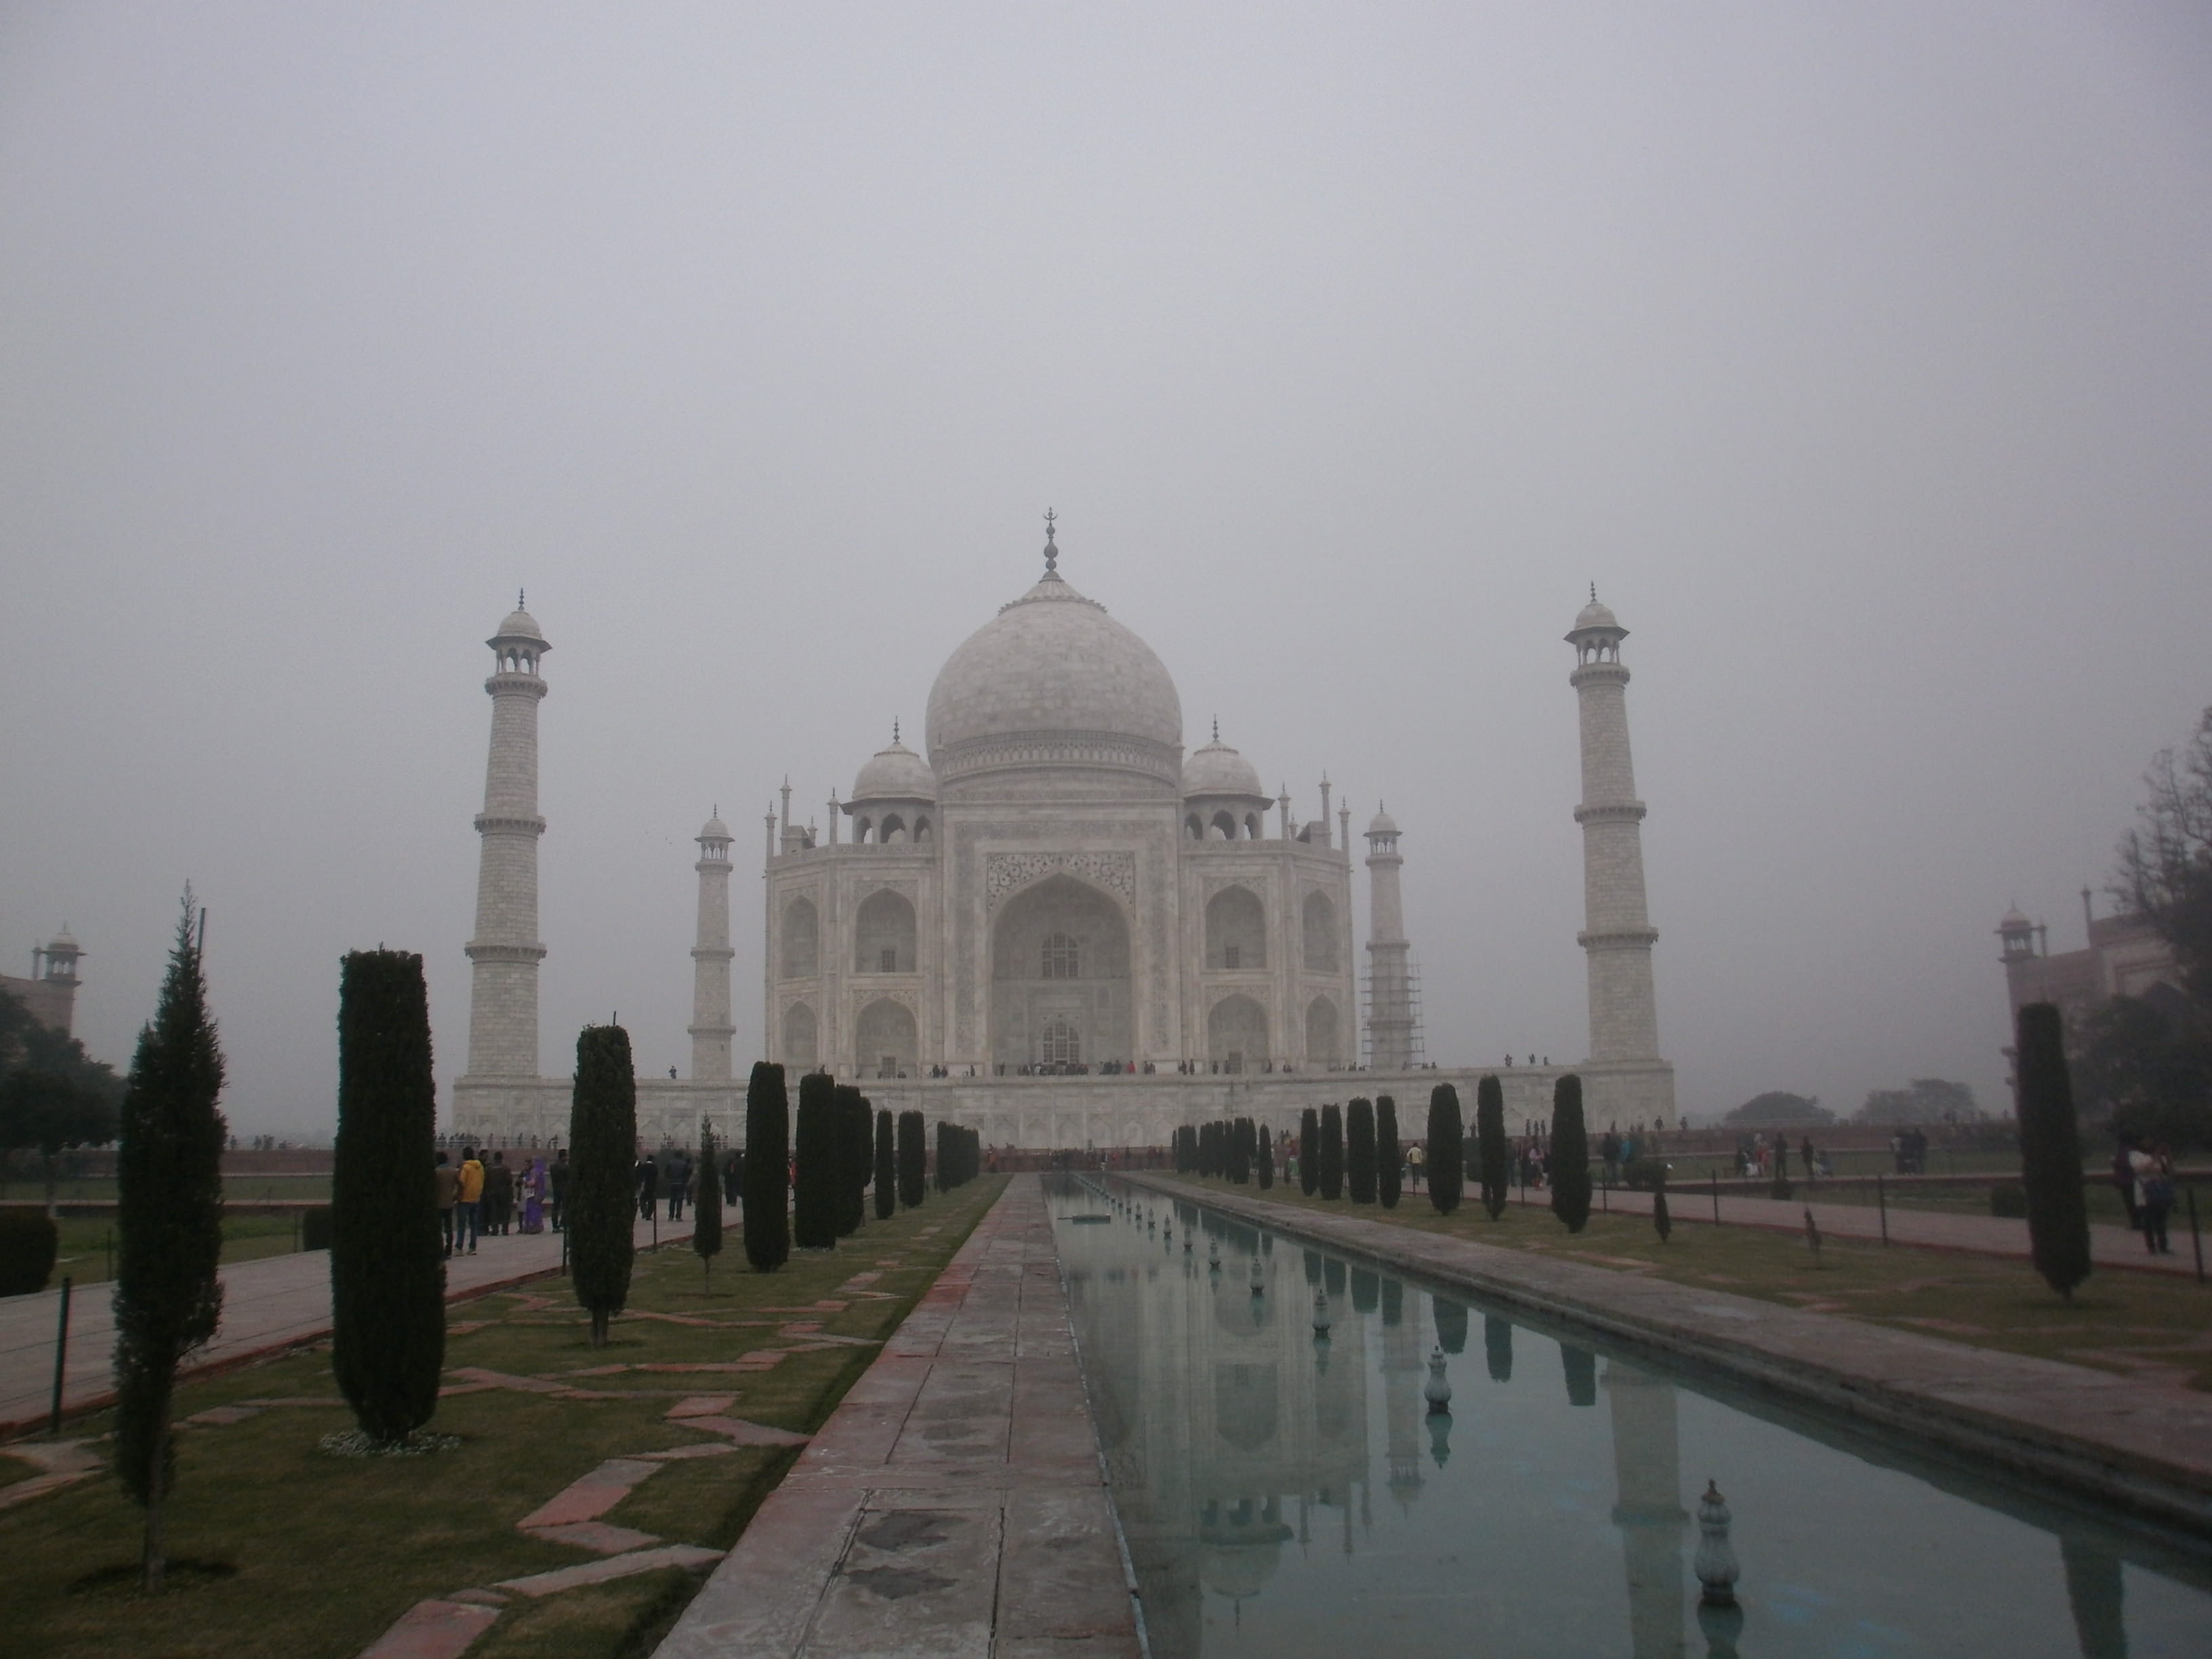 Taj Mahal - Agra India